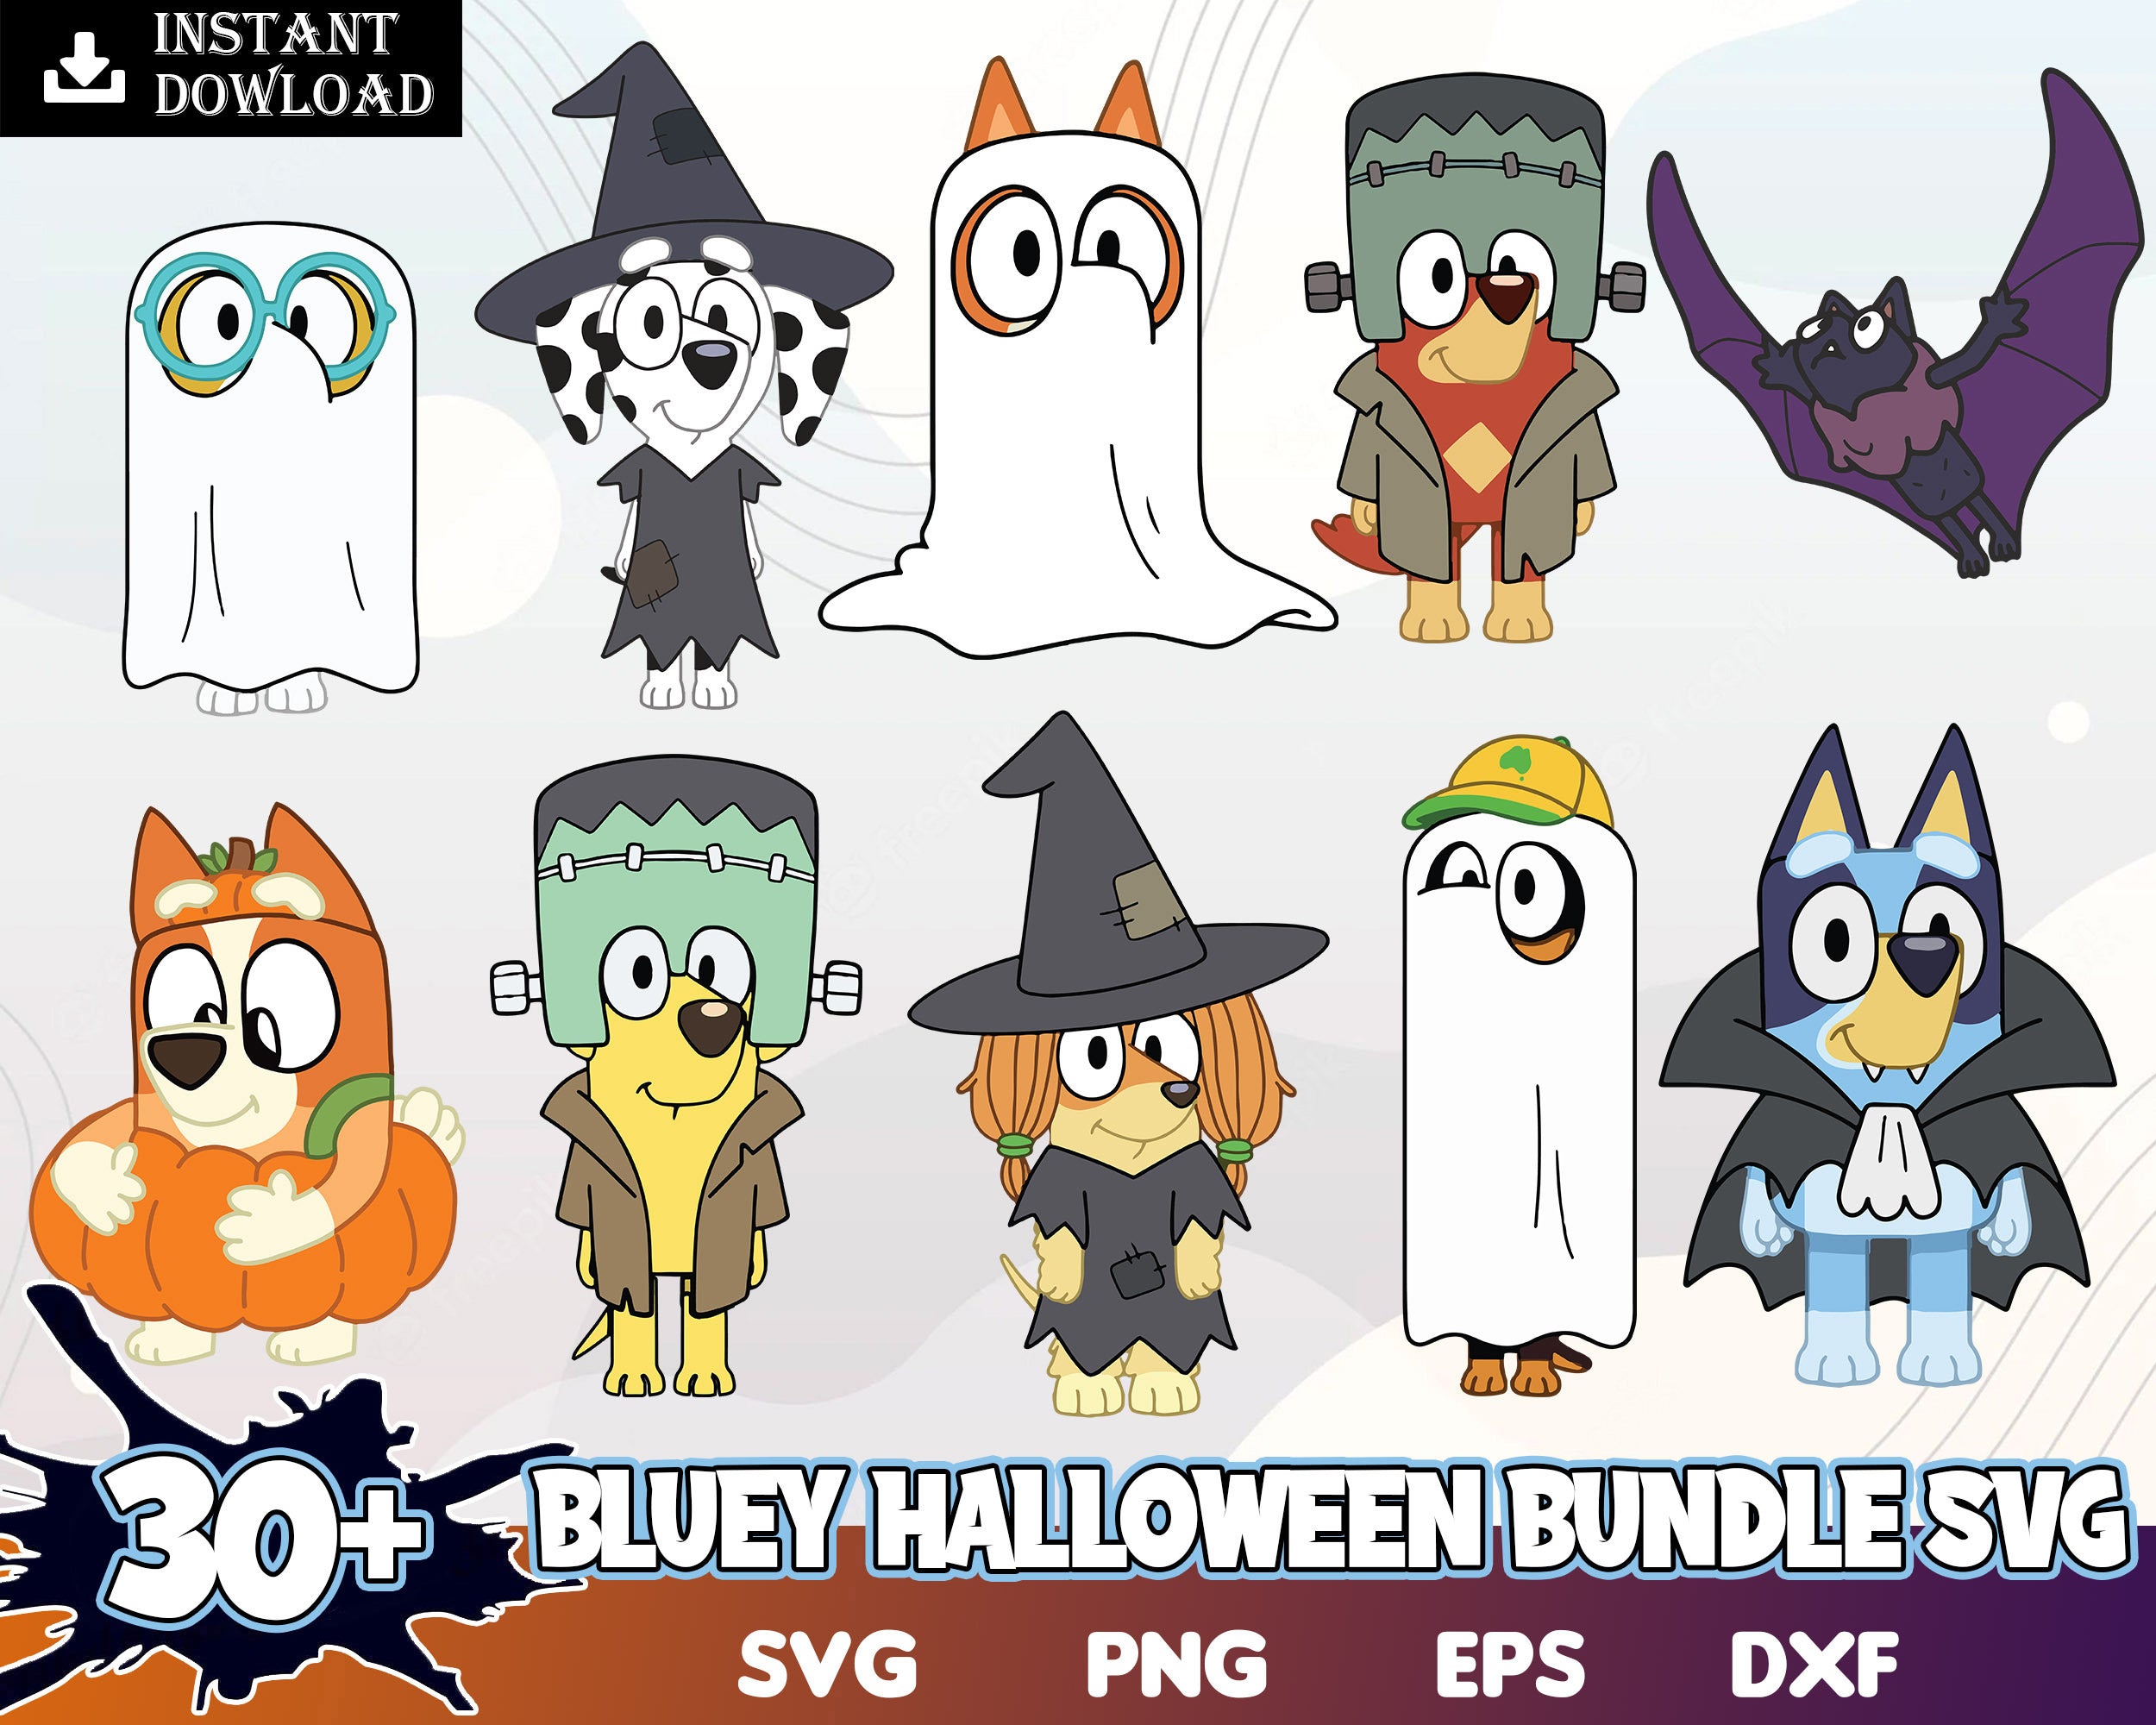 Halloween Bluey svg, Bluey vector, bluey horror in 4 formats, bluey cutfile, bluey clipart, bluey bundle